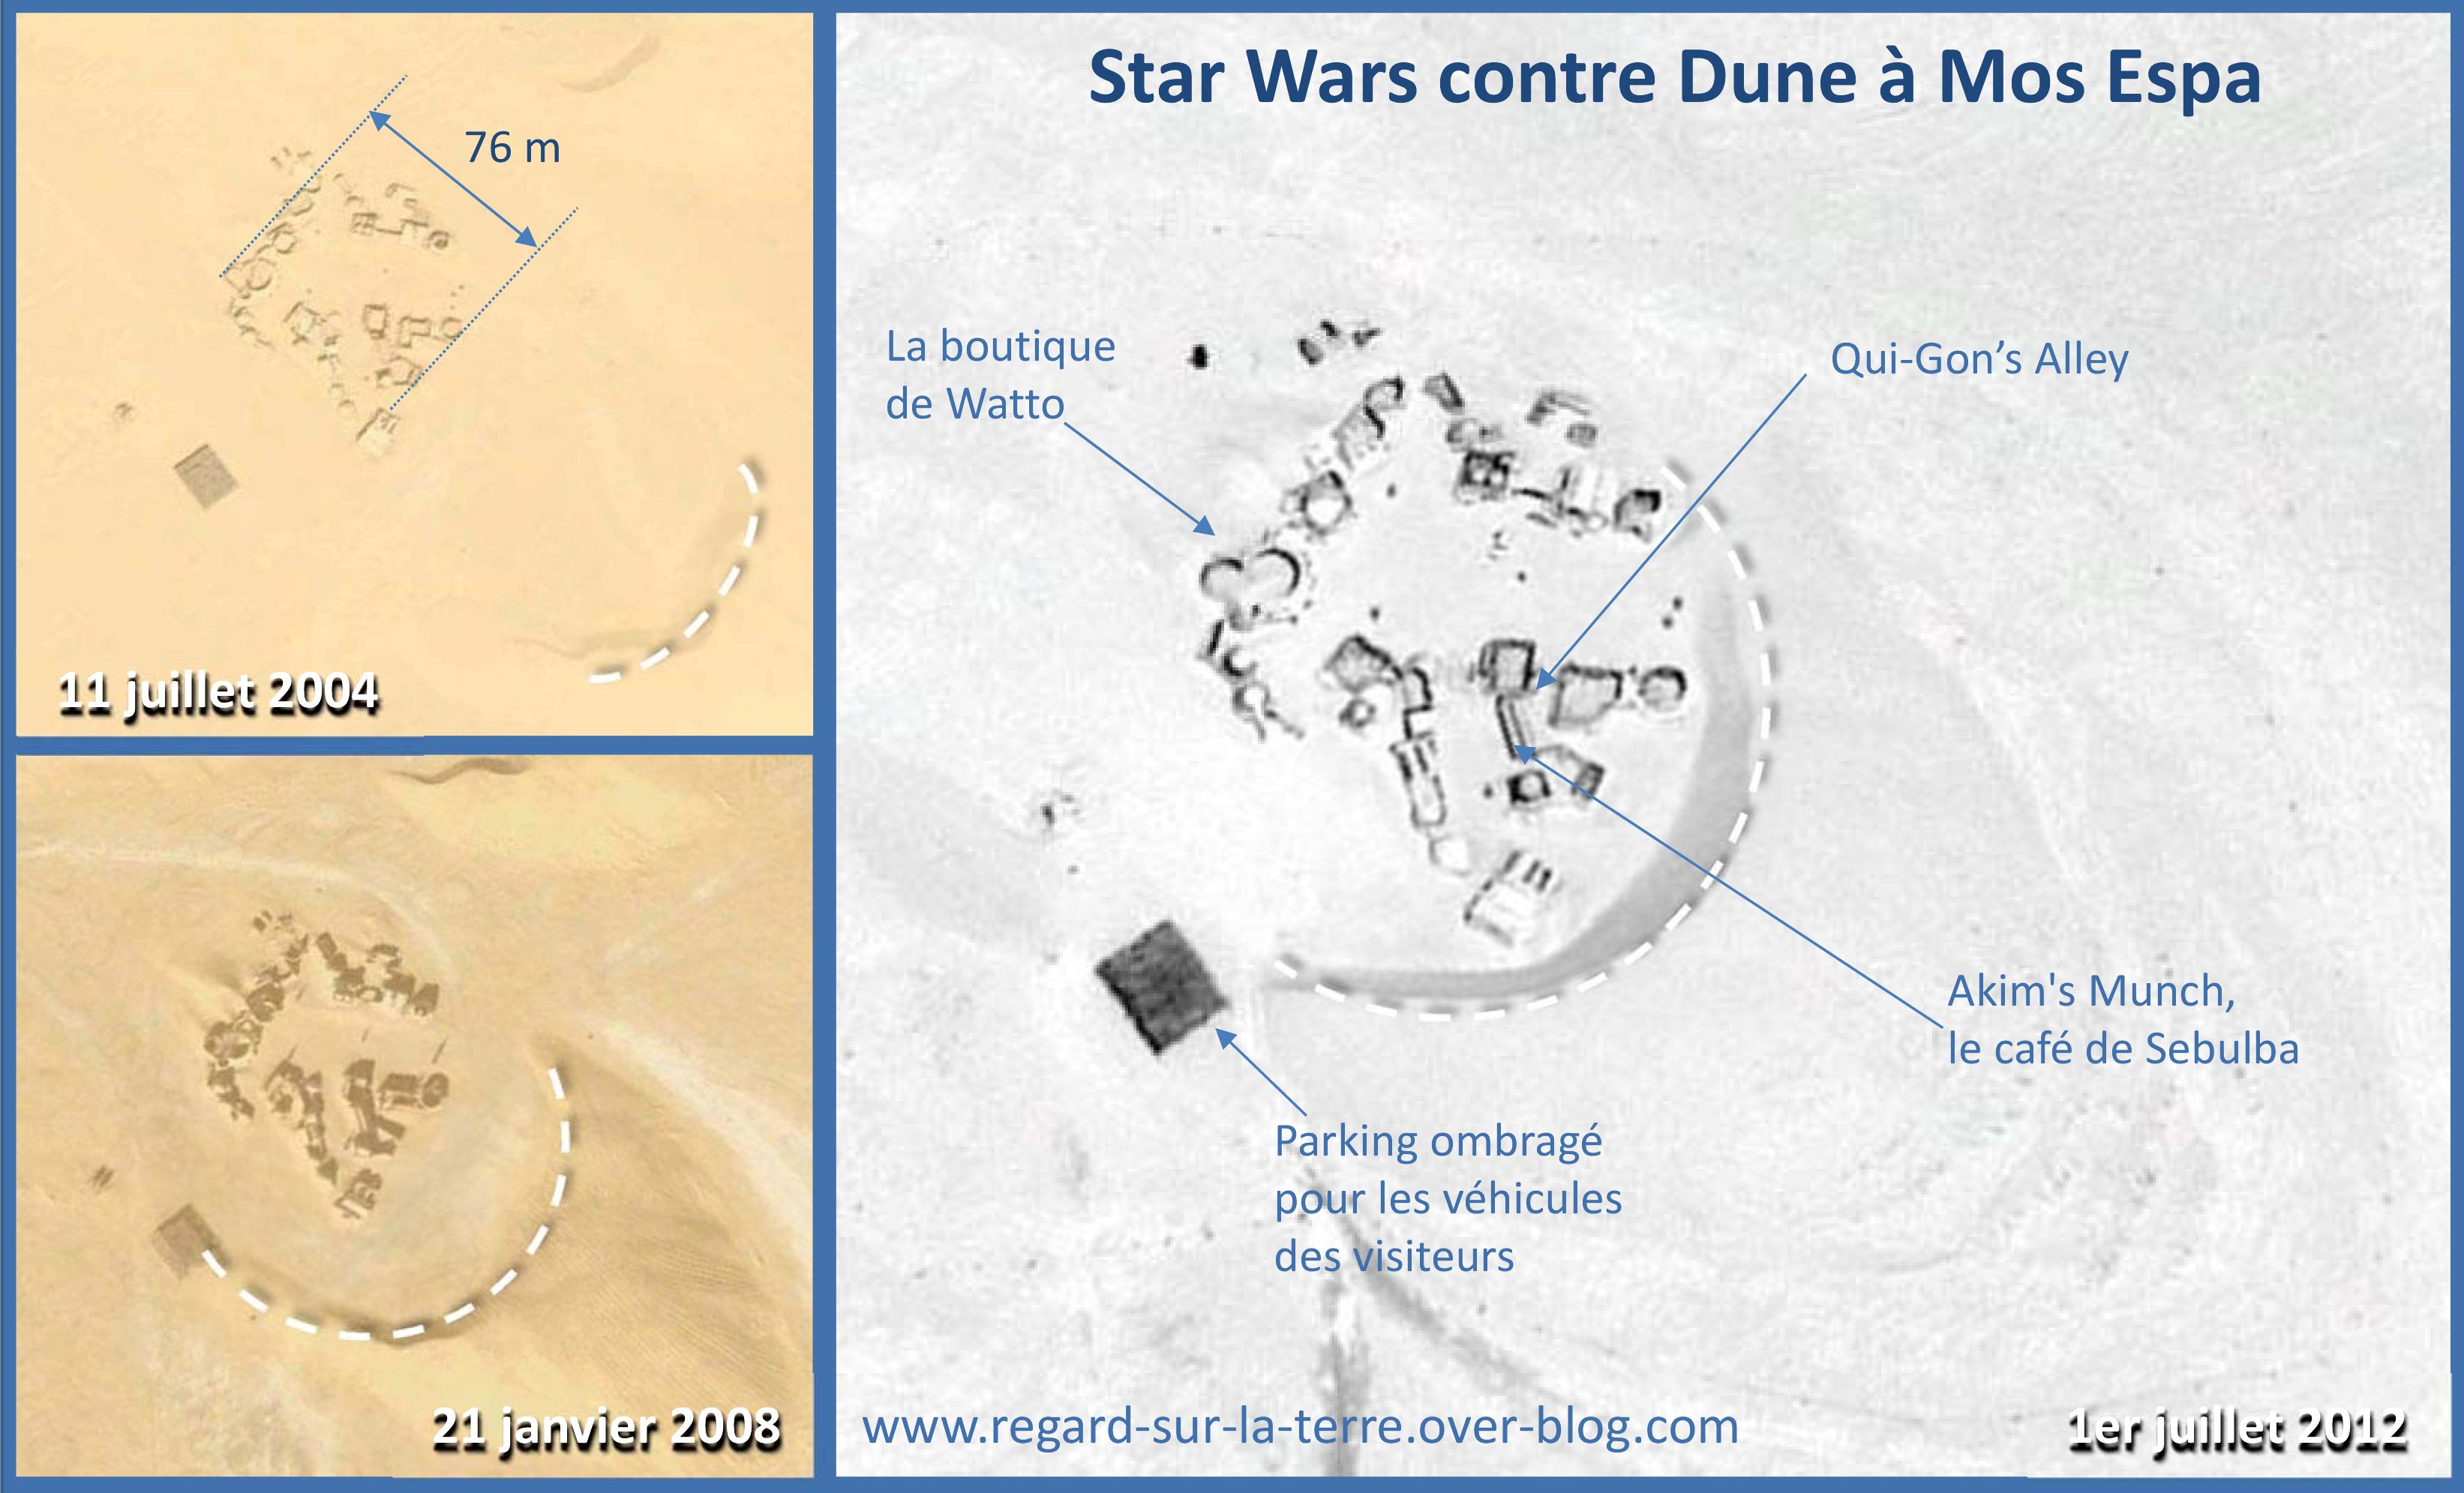 Tunisie - Ong Jmal - Mos Espa - Progression de la dune - Record drapeau - Star Wars - Dark Vador dans le sable - Google Earth